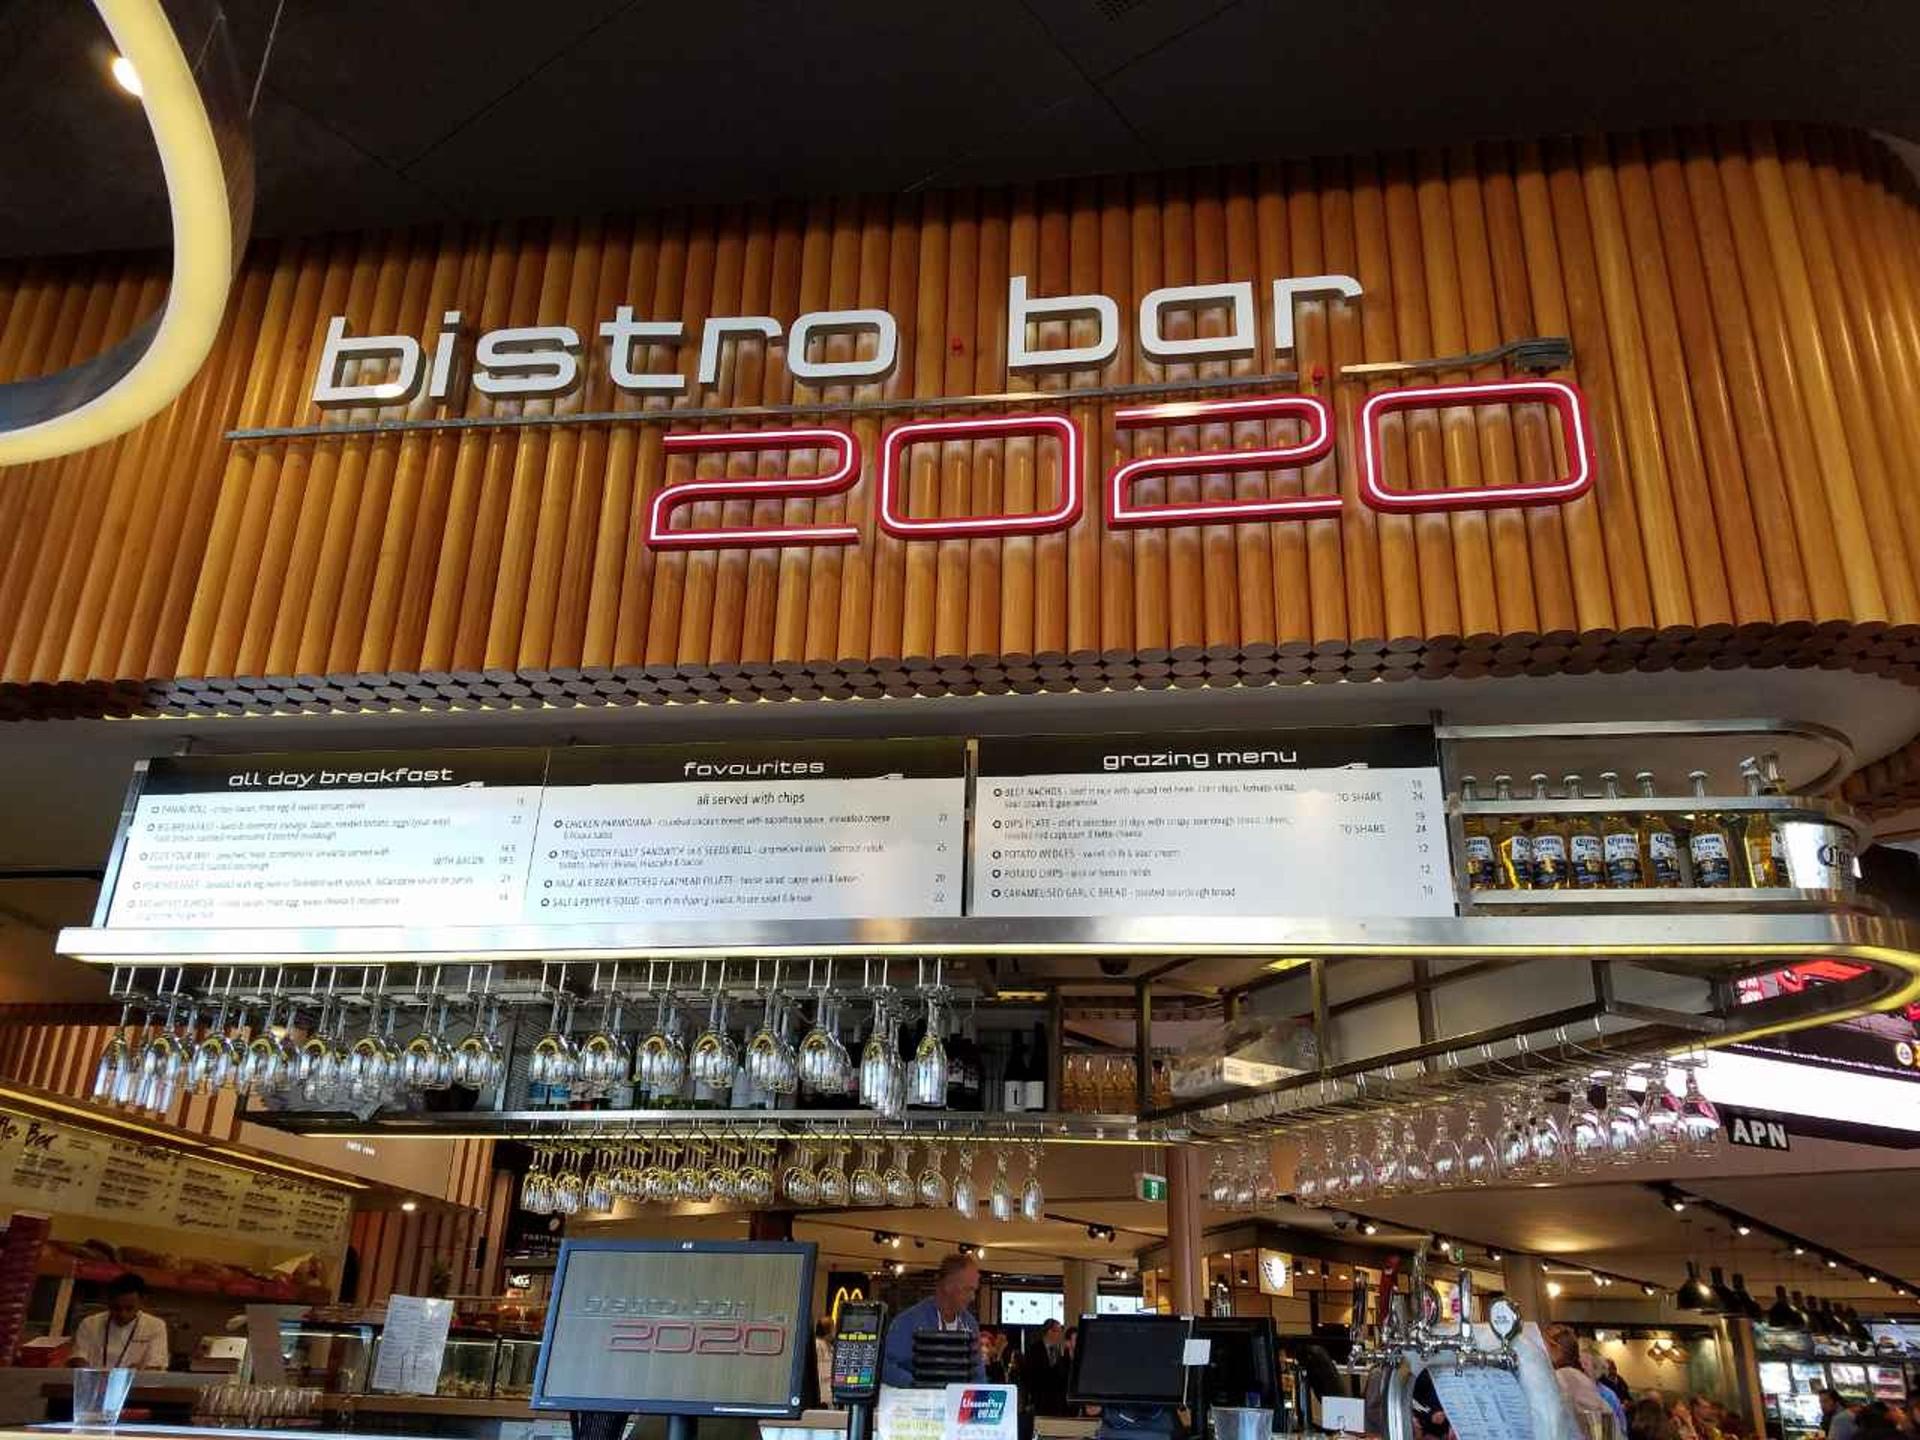 Bistro 2020 & Bar image 7 of 23